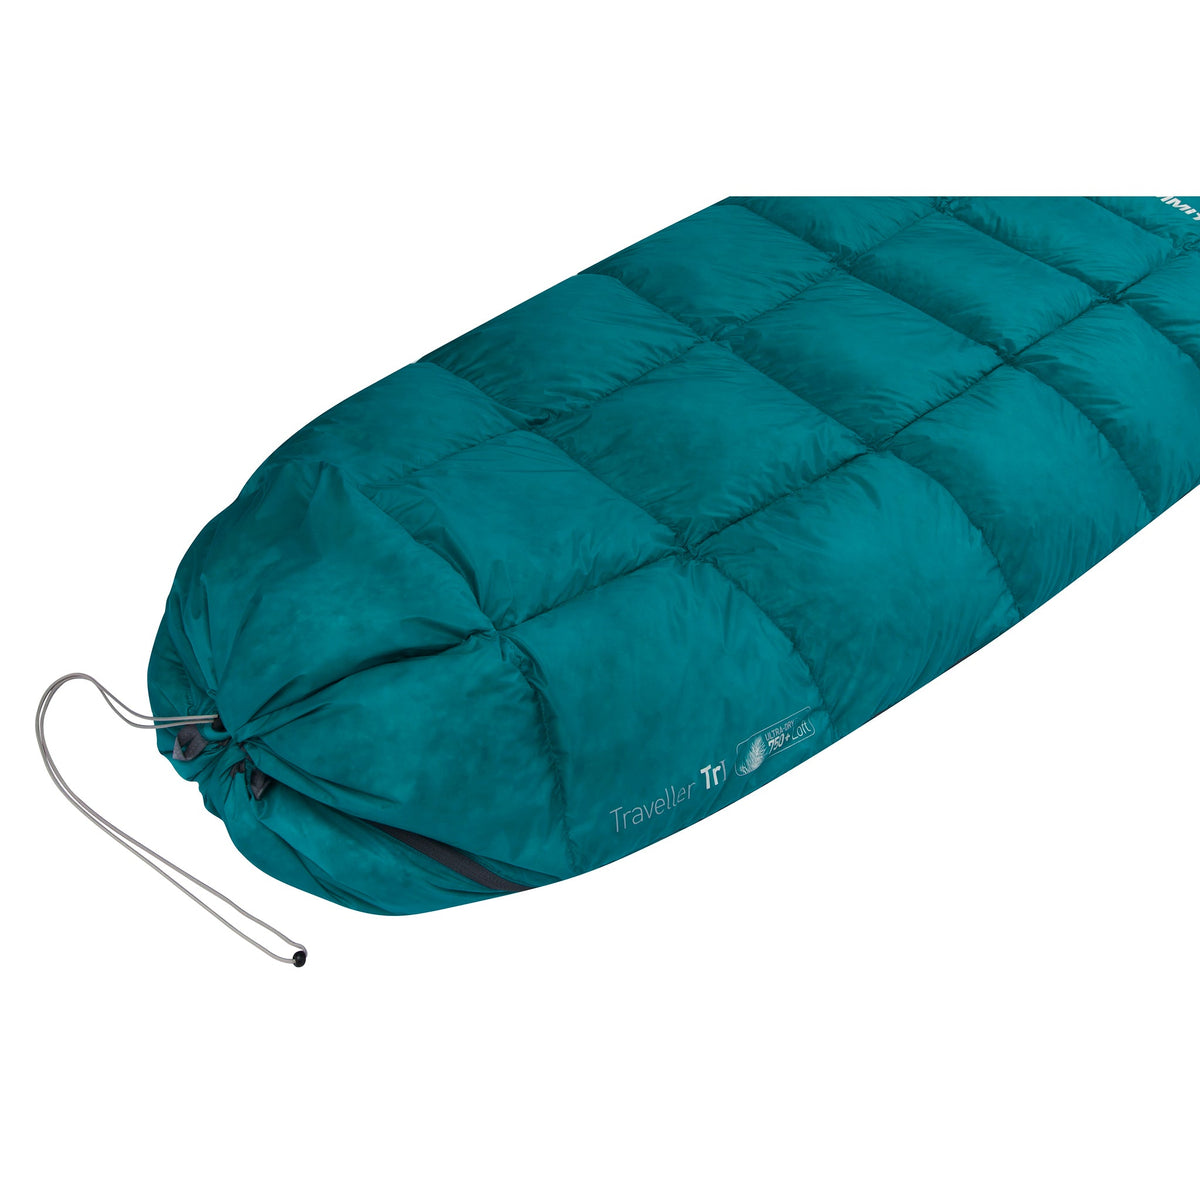 traveller sleeping bag & blanket